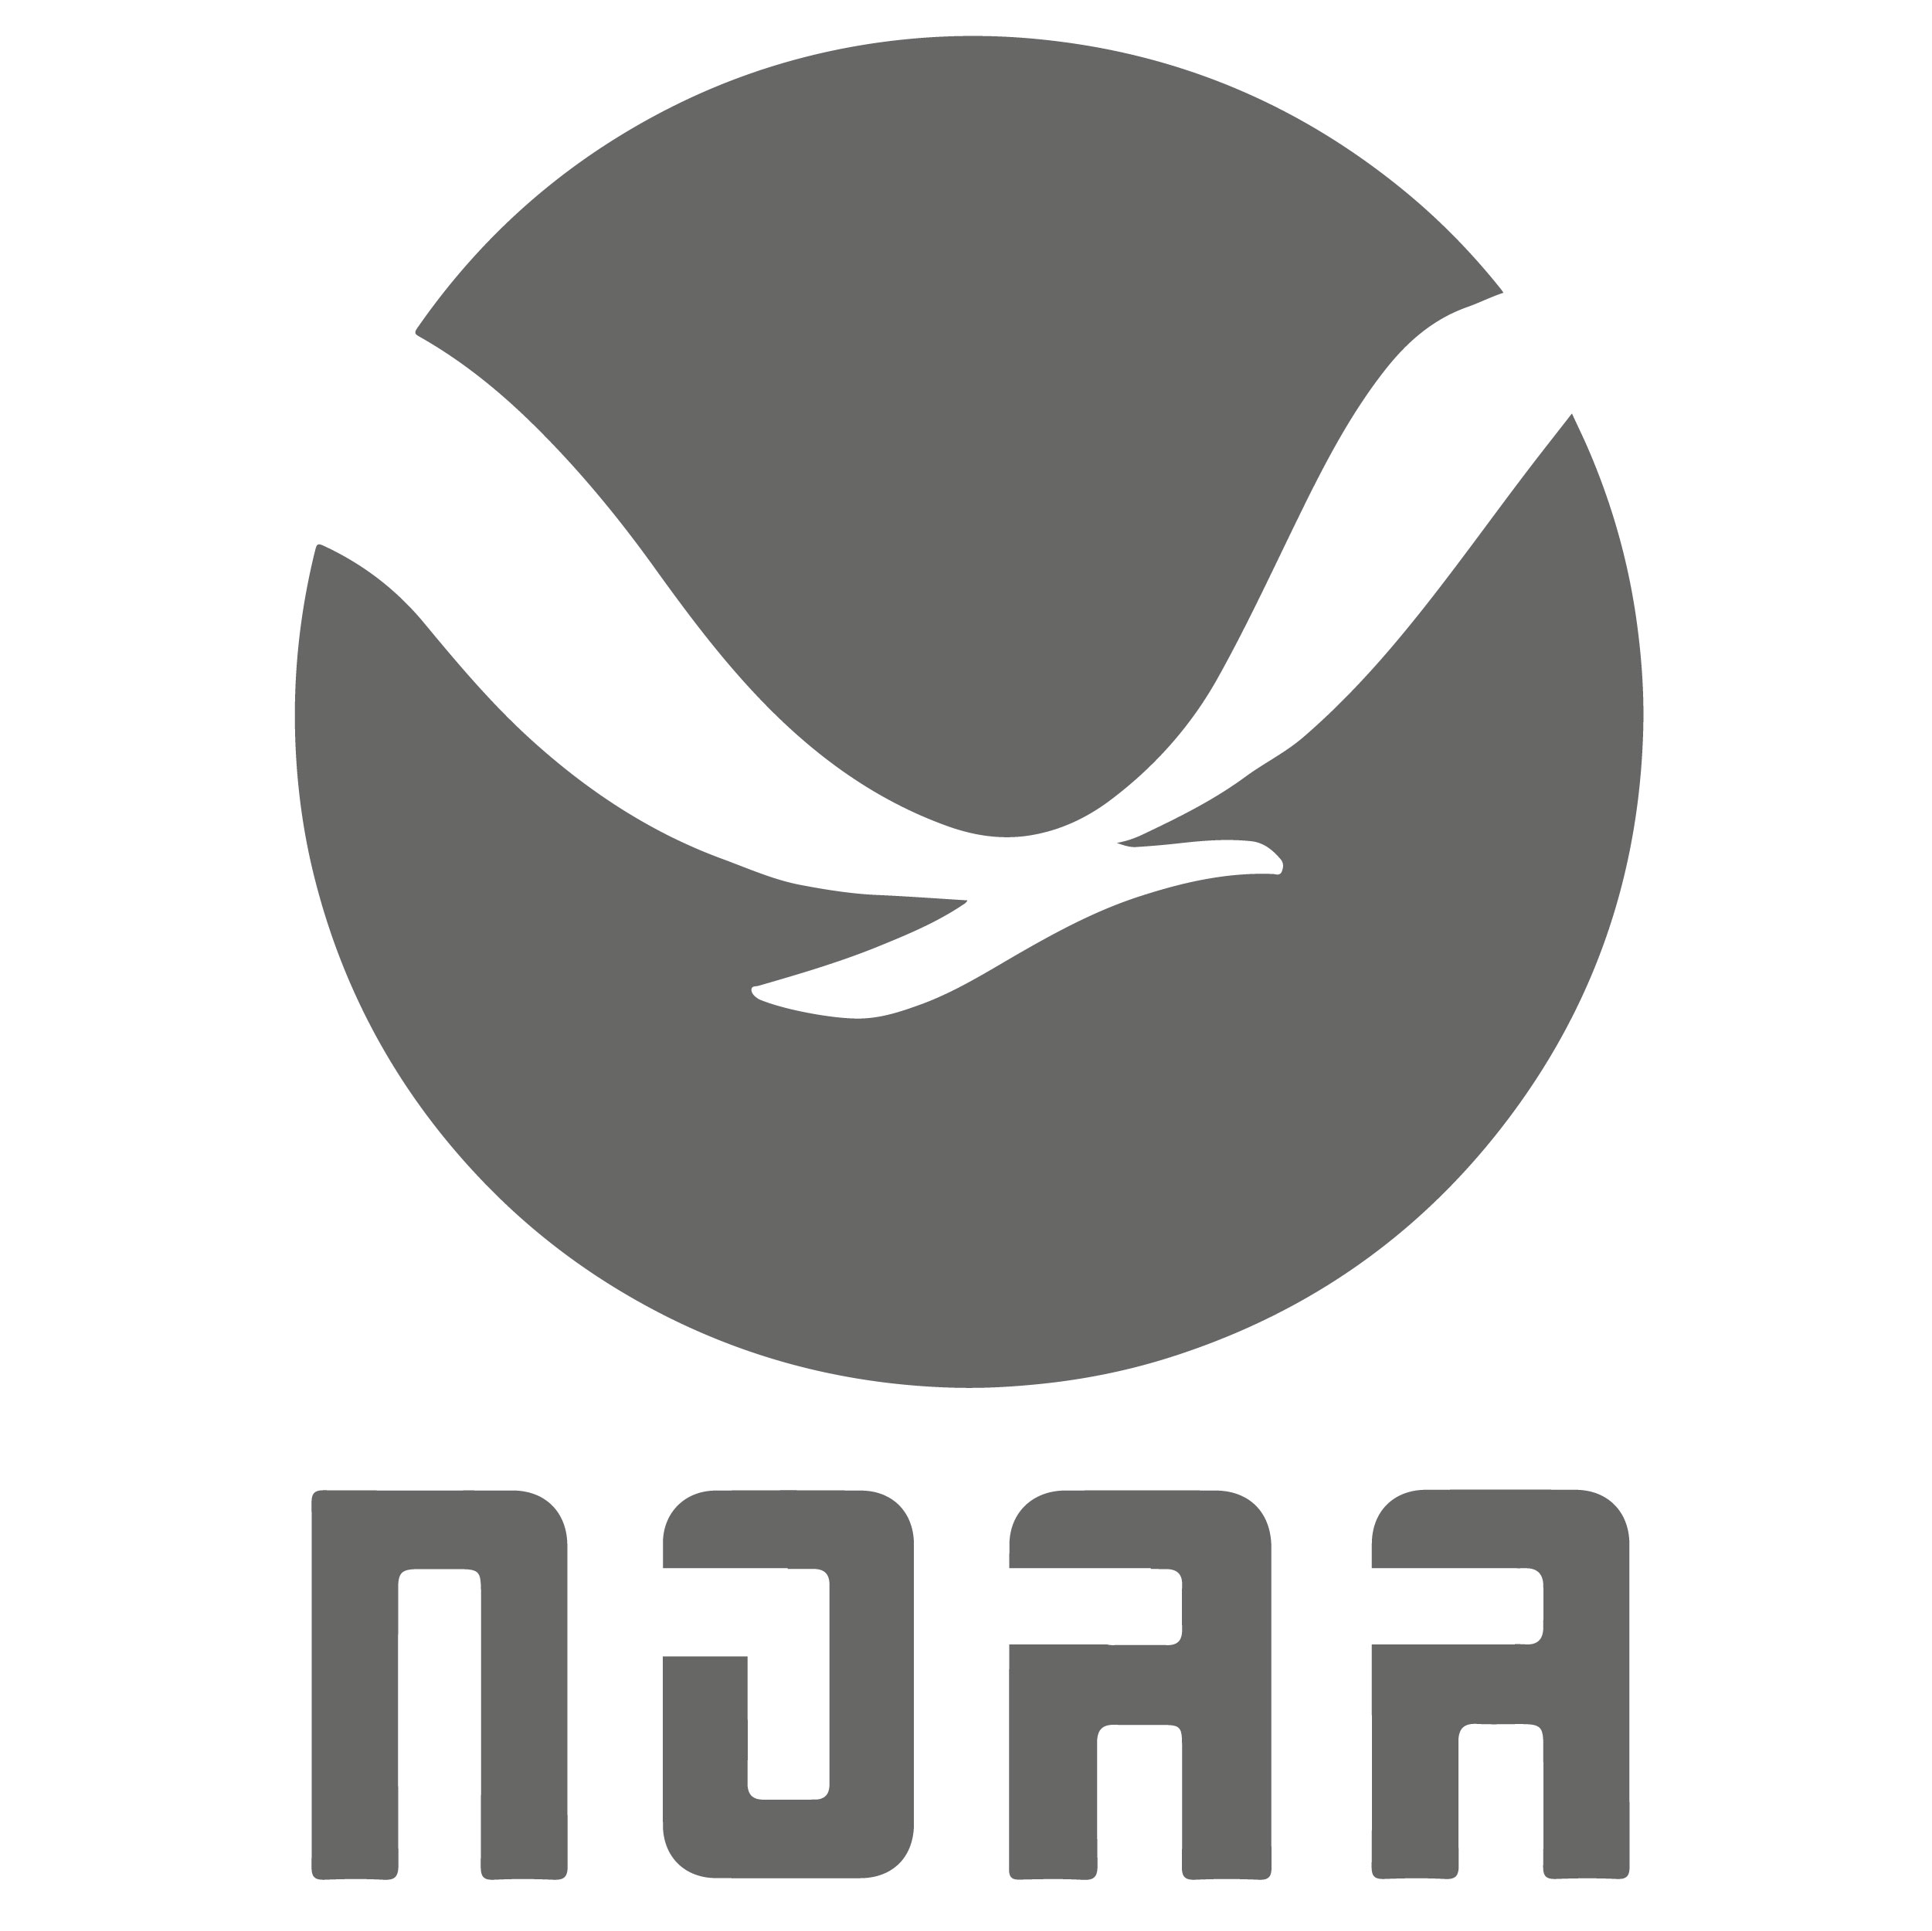 NOAA logo pumpkin carving template.